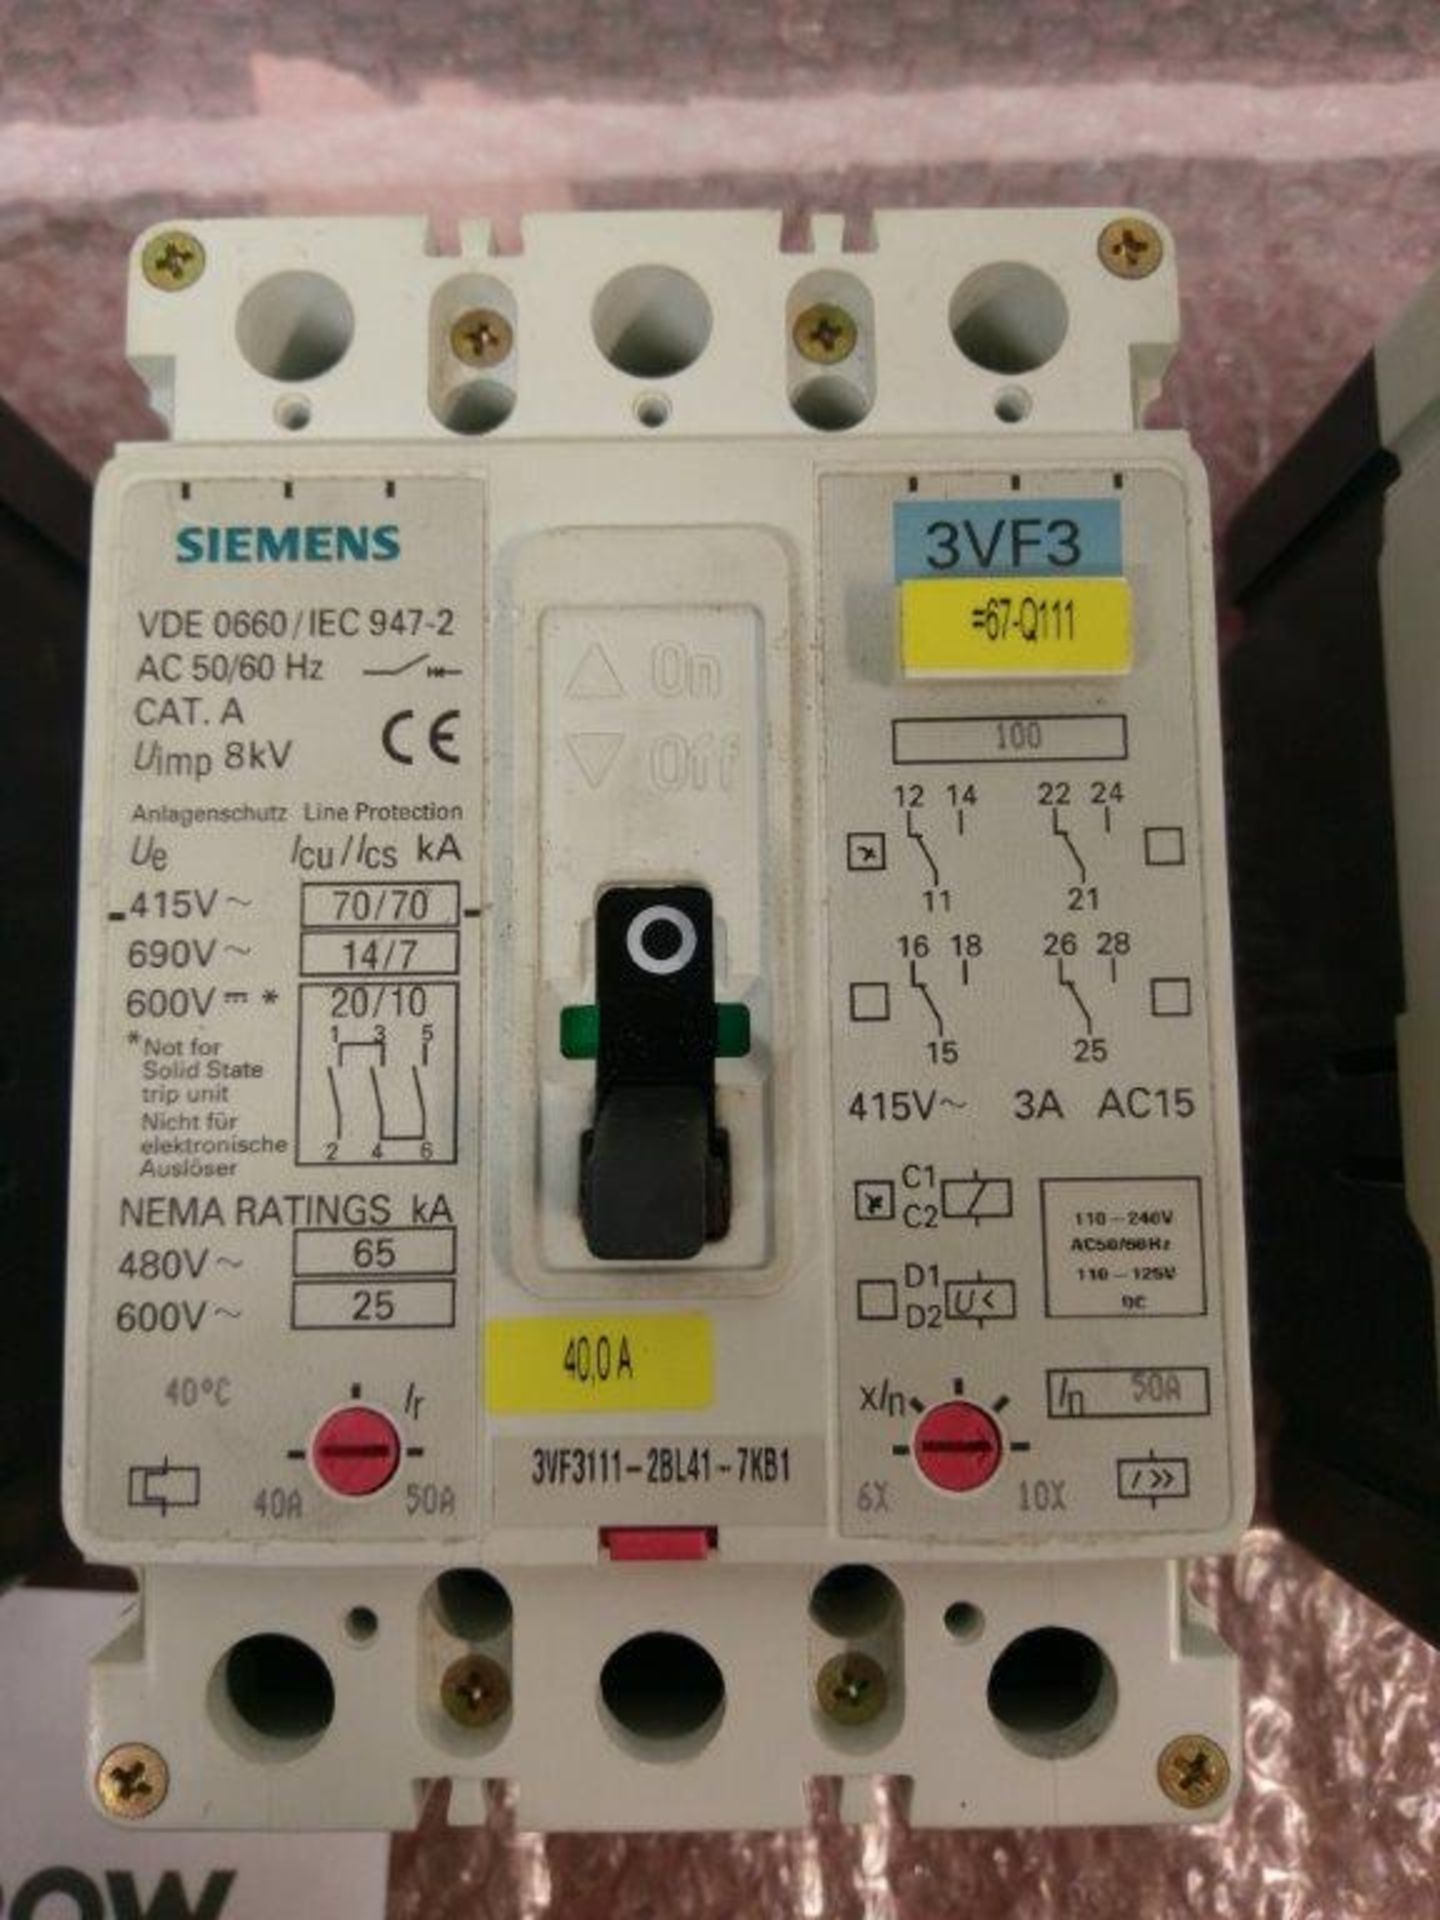 Lot of 3 Siemens Circuit Breaker Model 3VF3111-2BL41-7KB1 40.0 A - Image 3 of 3